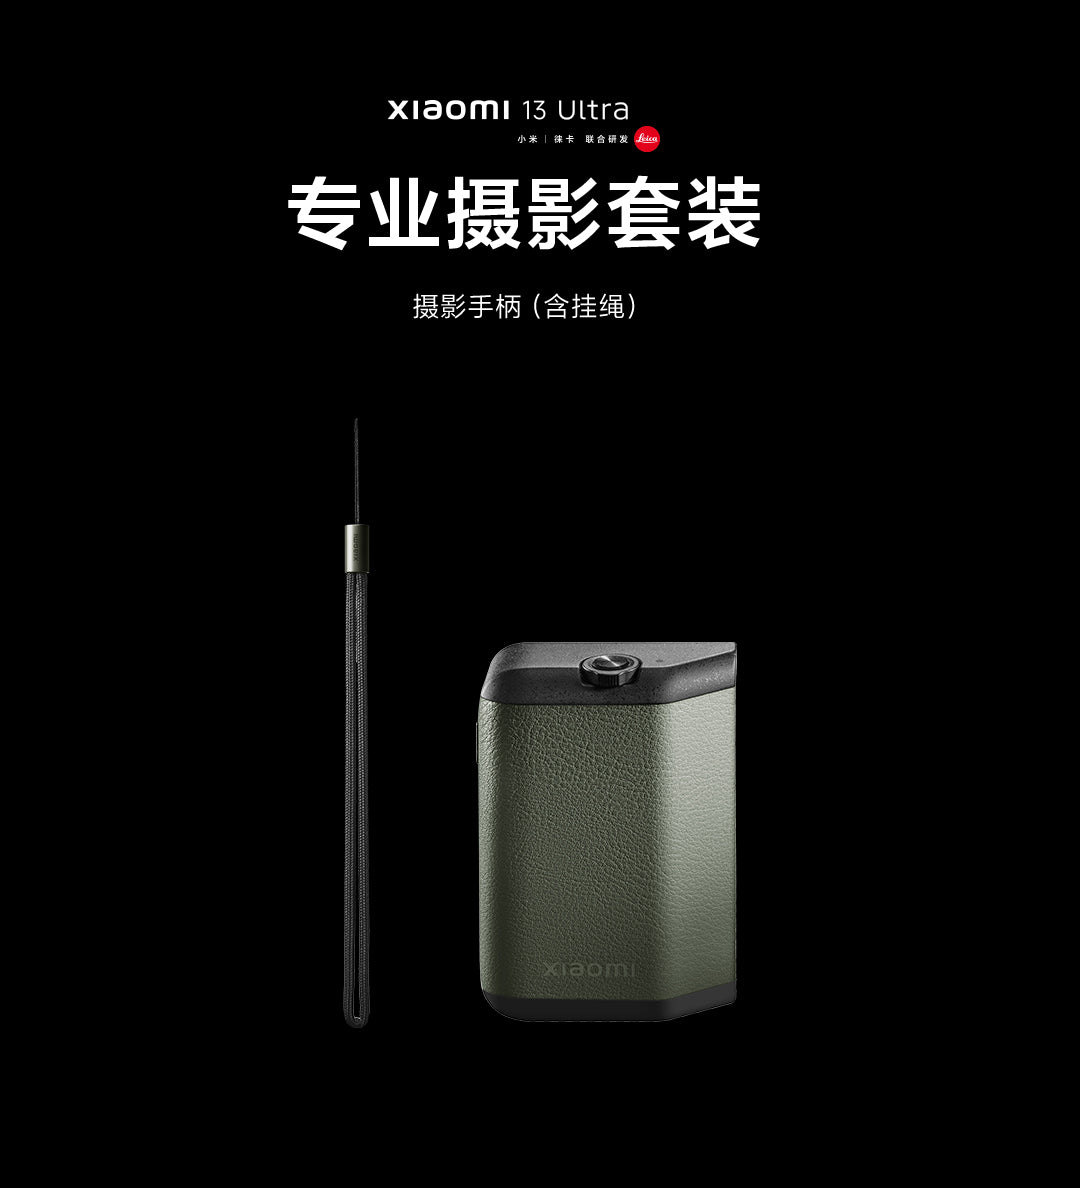 Kit de fotografia ultra profissional Xiaomi 13 